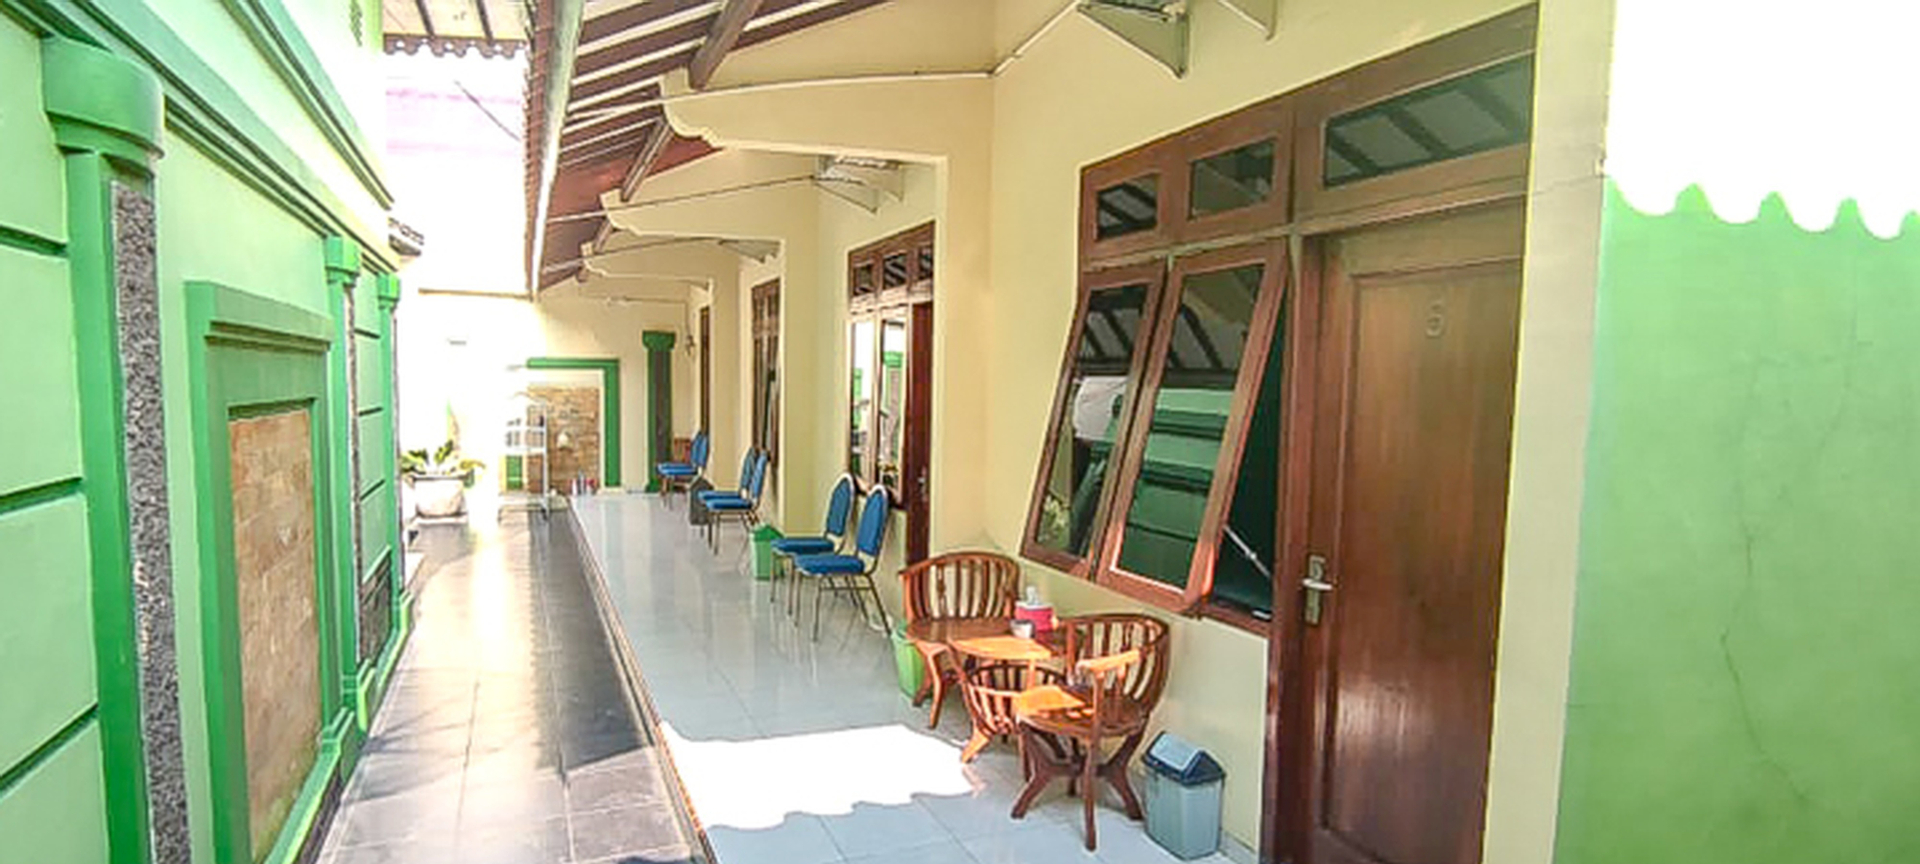 Exterior & Views 4, Hotel Wisata Ziarah Sunan Bonang Syariah RedPartner, Tuban